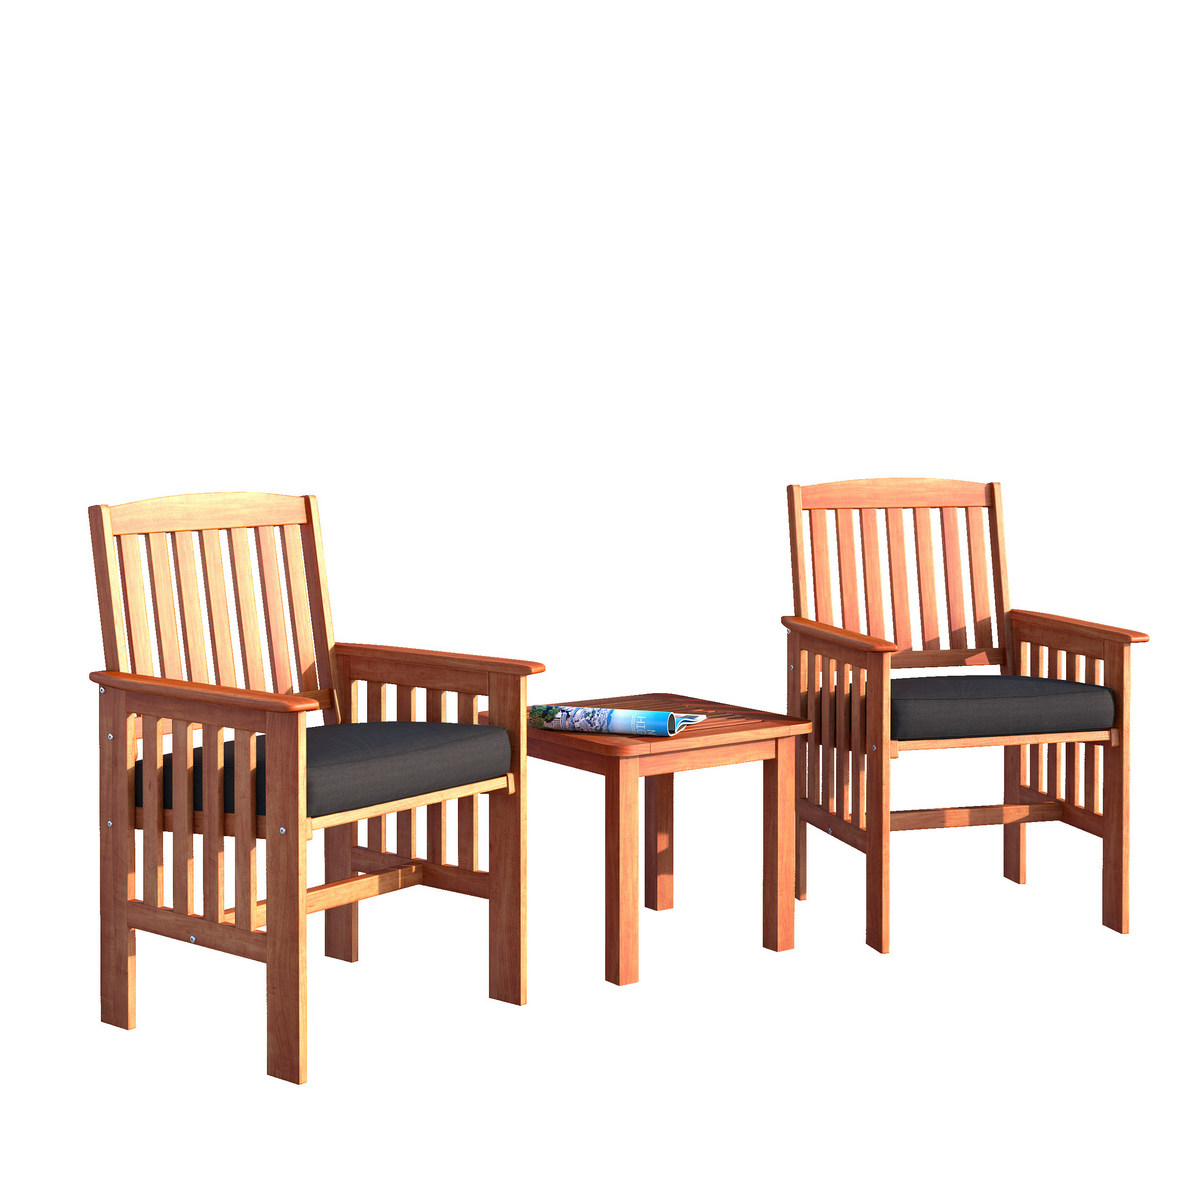 Corliving Pex-864-z Miramar 3pc Cinnamon Brown Hardwood Outdoor Chair & Side Table Set